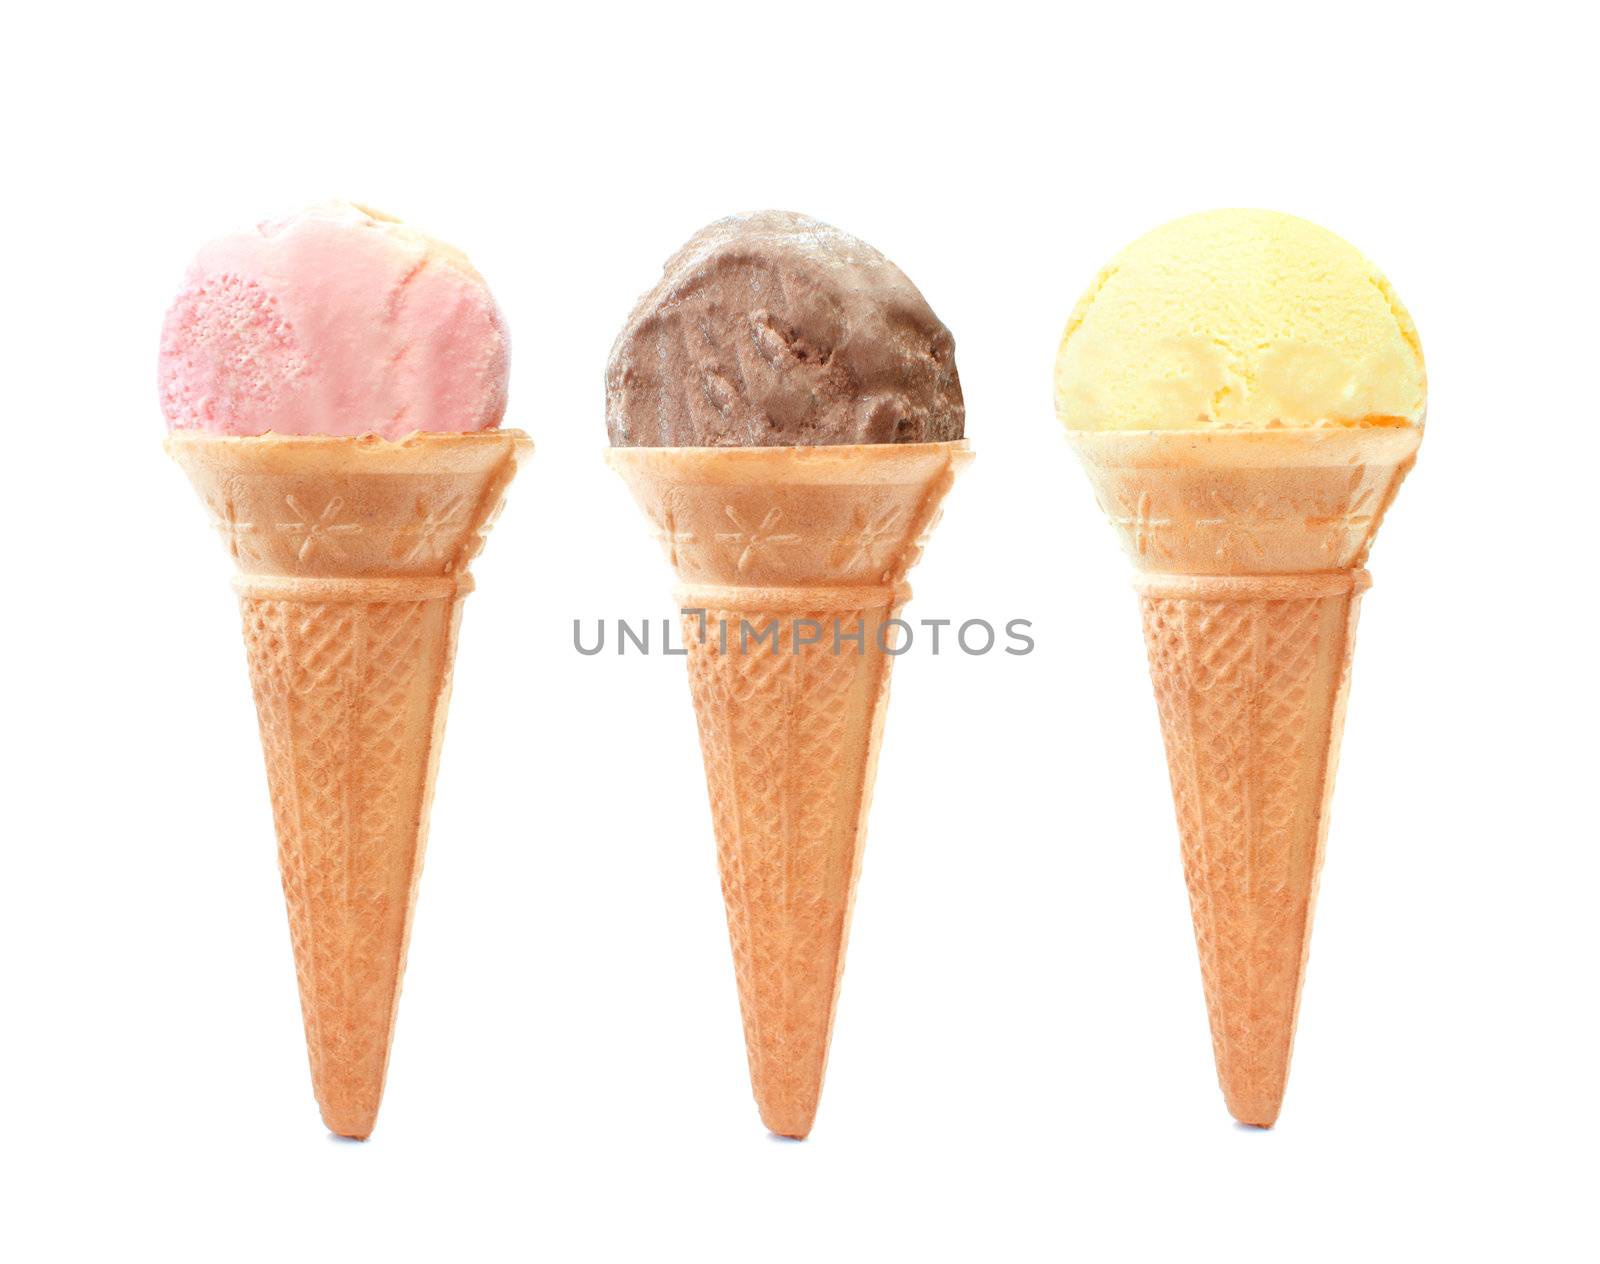 Strawberry,vanilla and chocolate icecream cones isolated over a white background